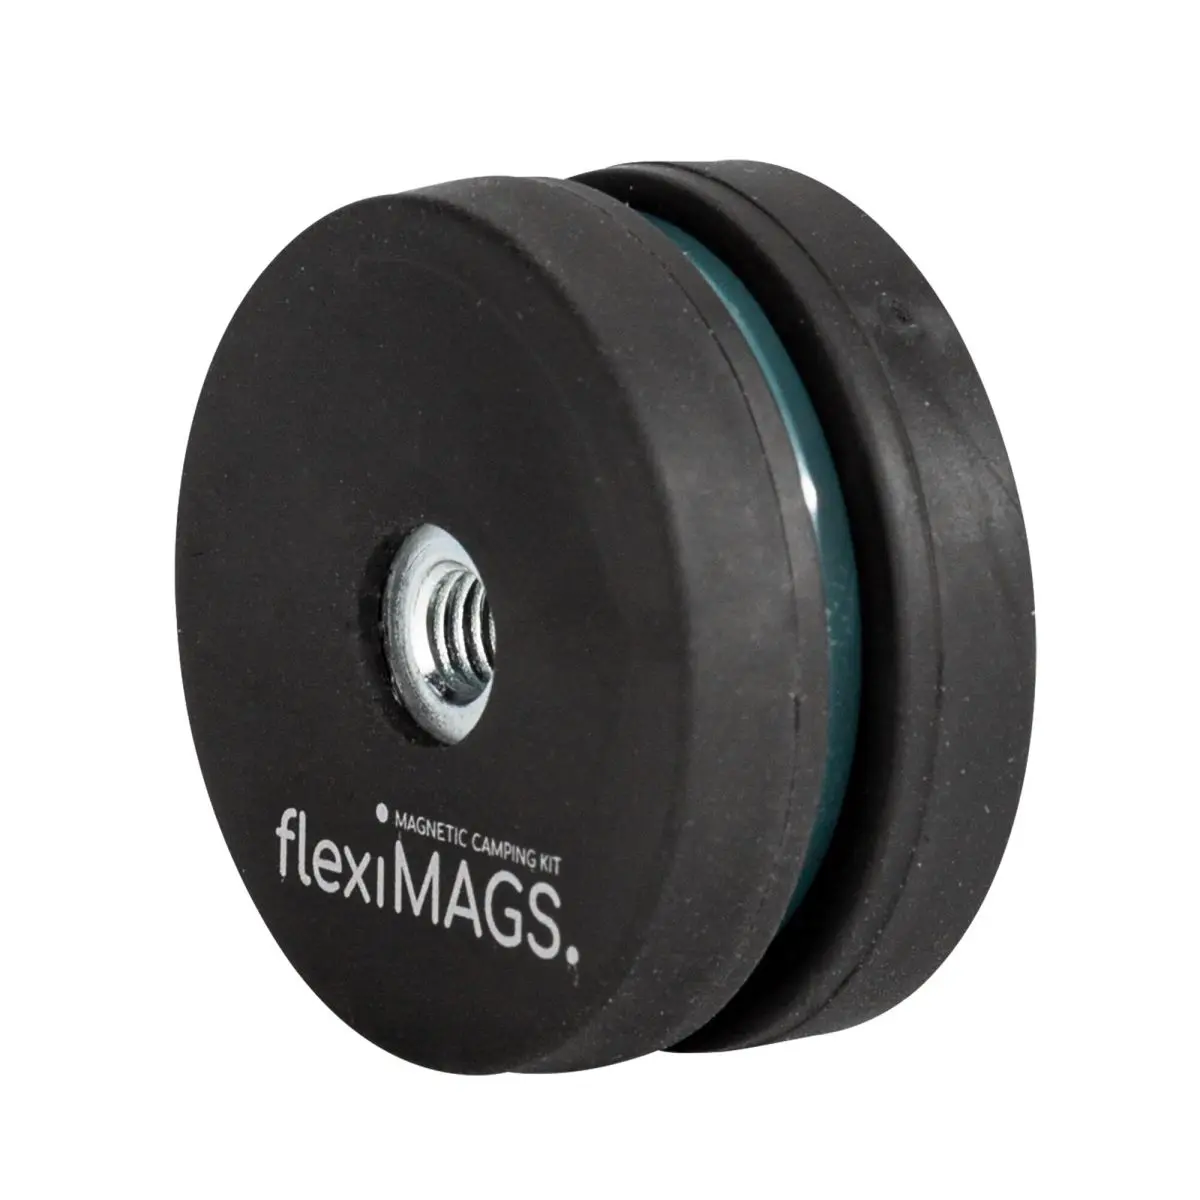 Magnet rund flexiMAGS - flexiMAG-31, 4er Set schwarz